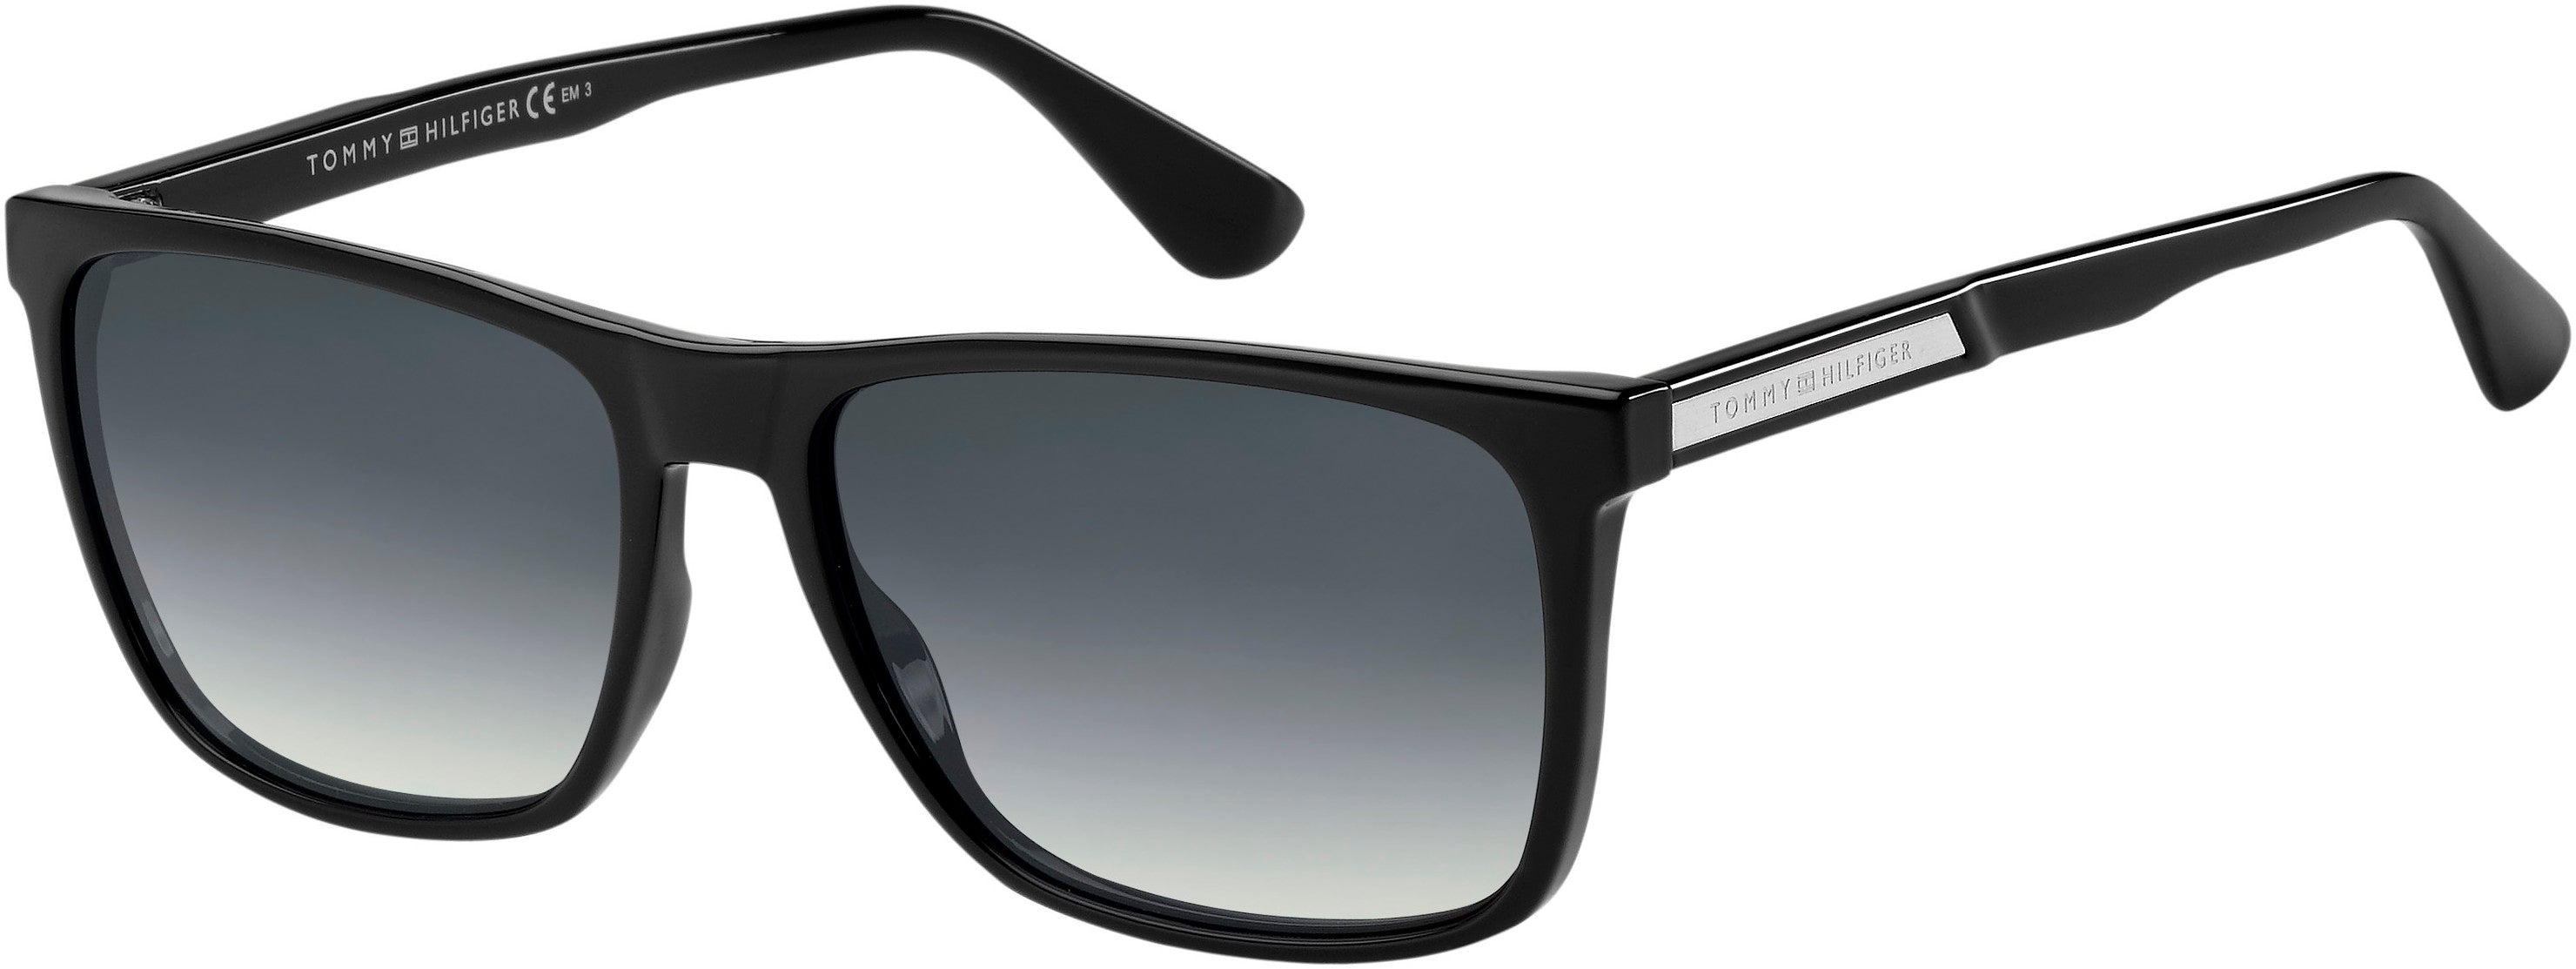 Tommy Hilfiger T. Hilfiger 1547/S Rectangular Sunglasses 0807-0807  Black (9O Dark Gray Gradient)